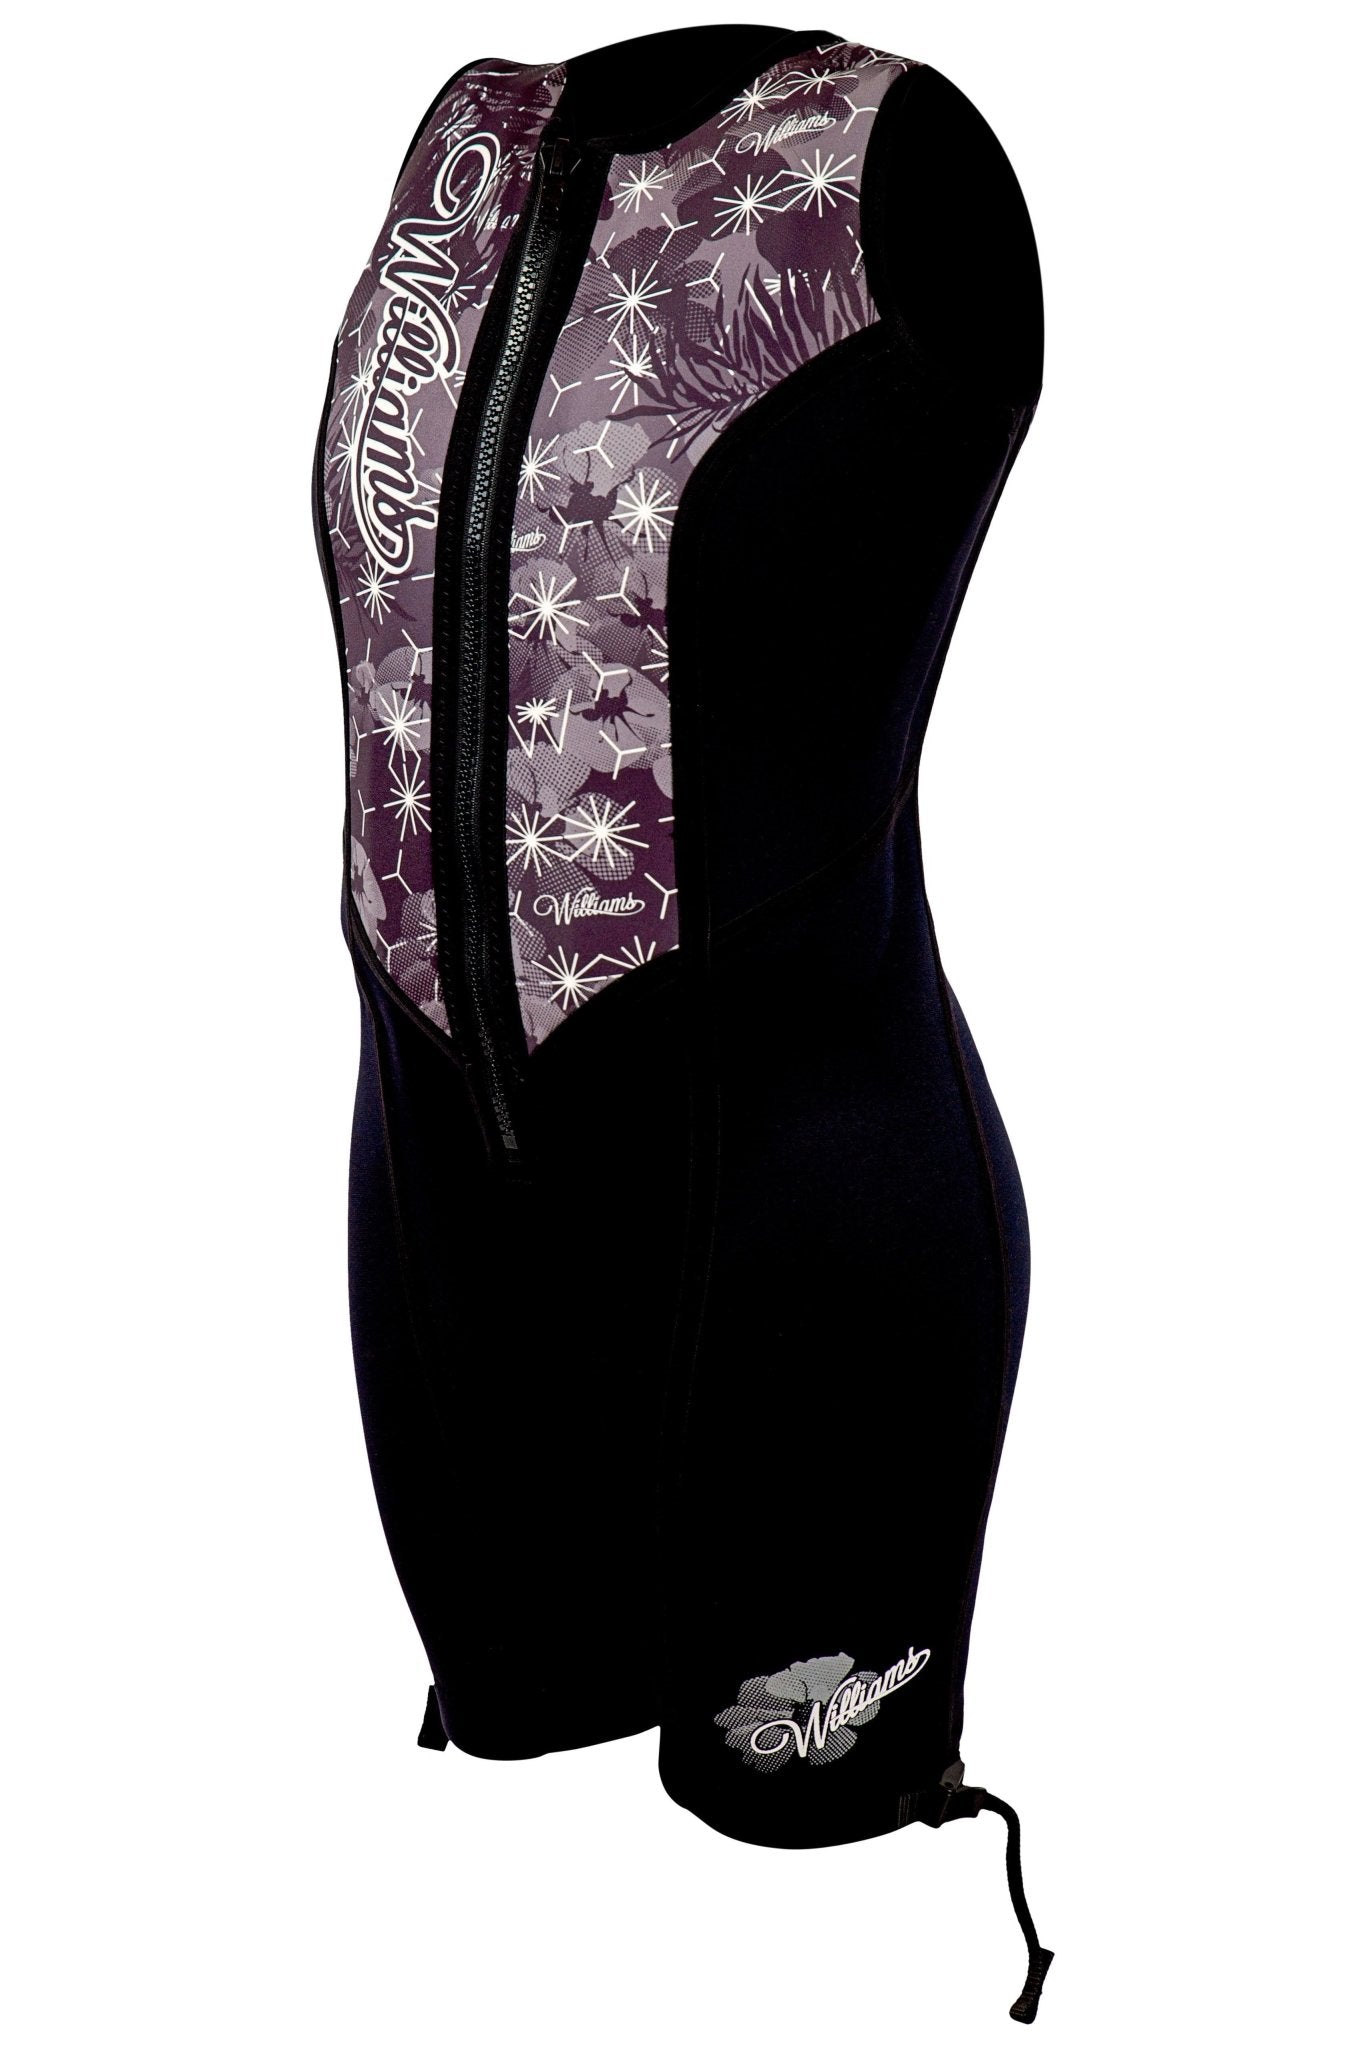 Ladies Sports Wetsuit -Williams208242-8-Black/Black